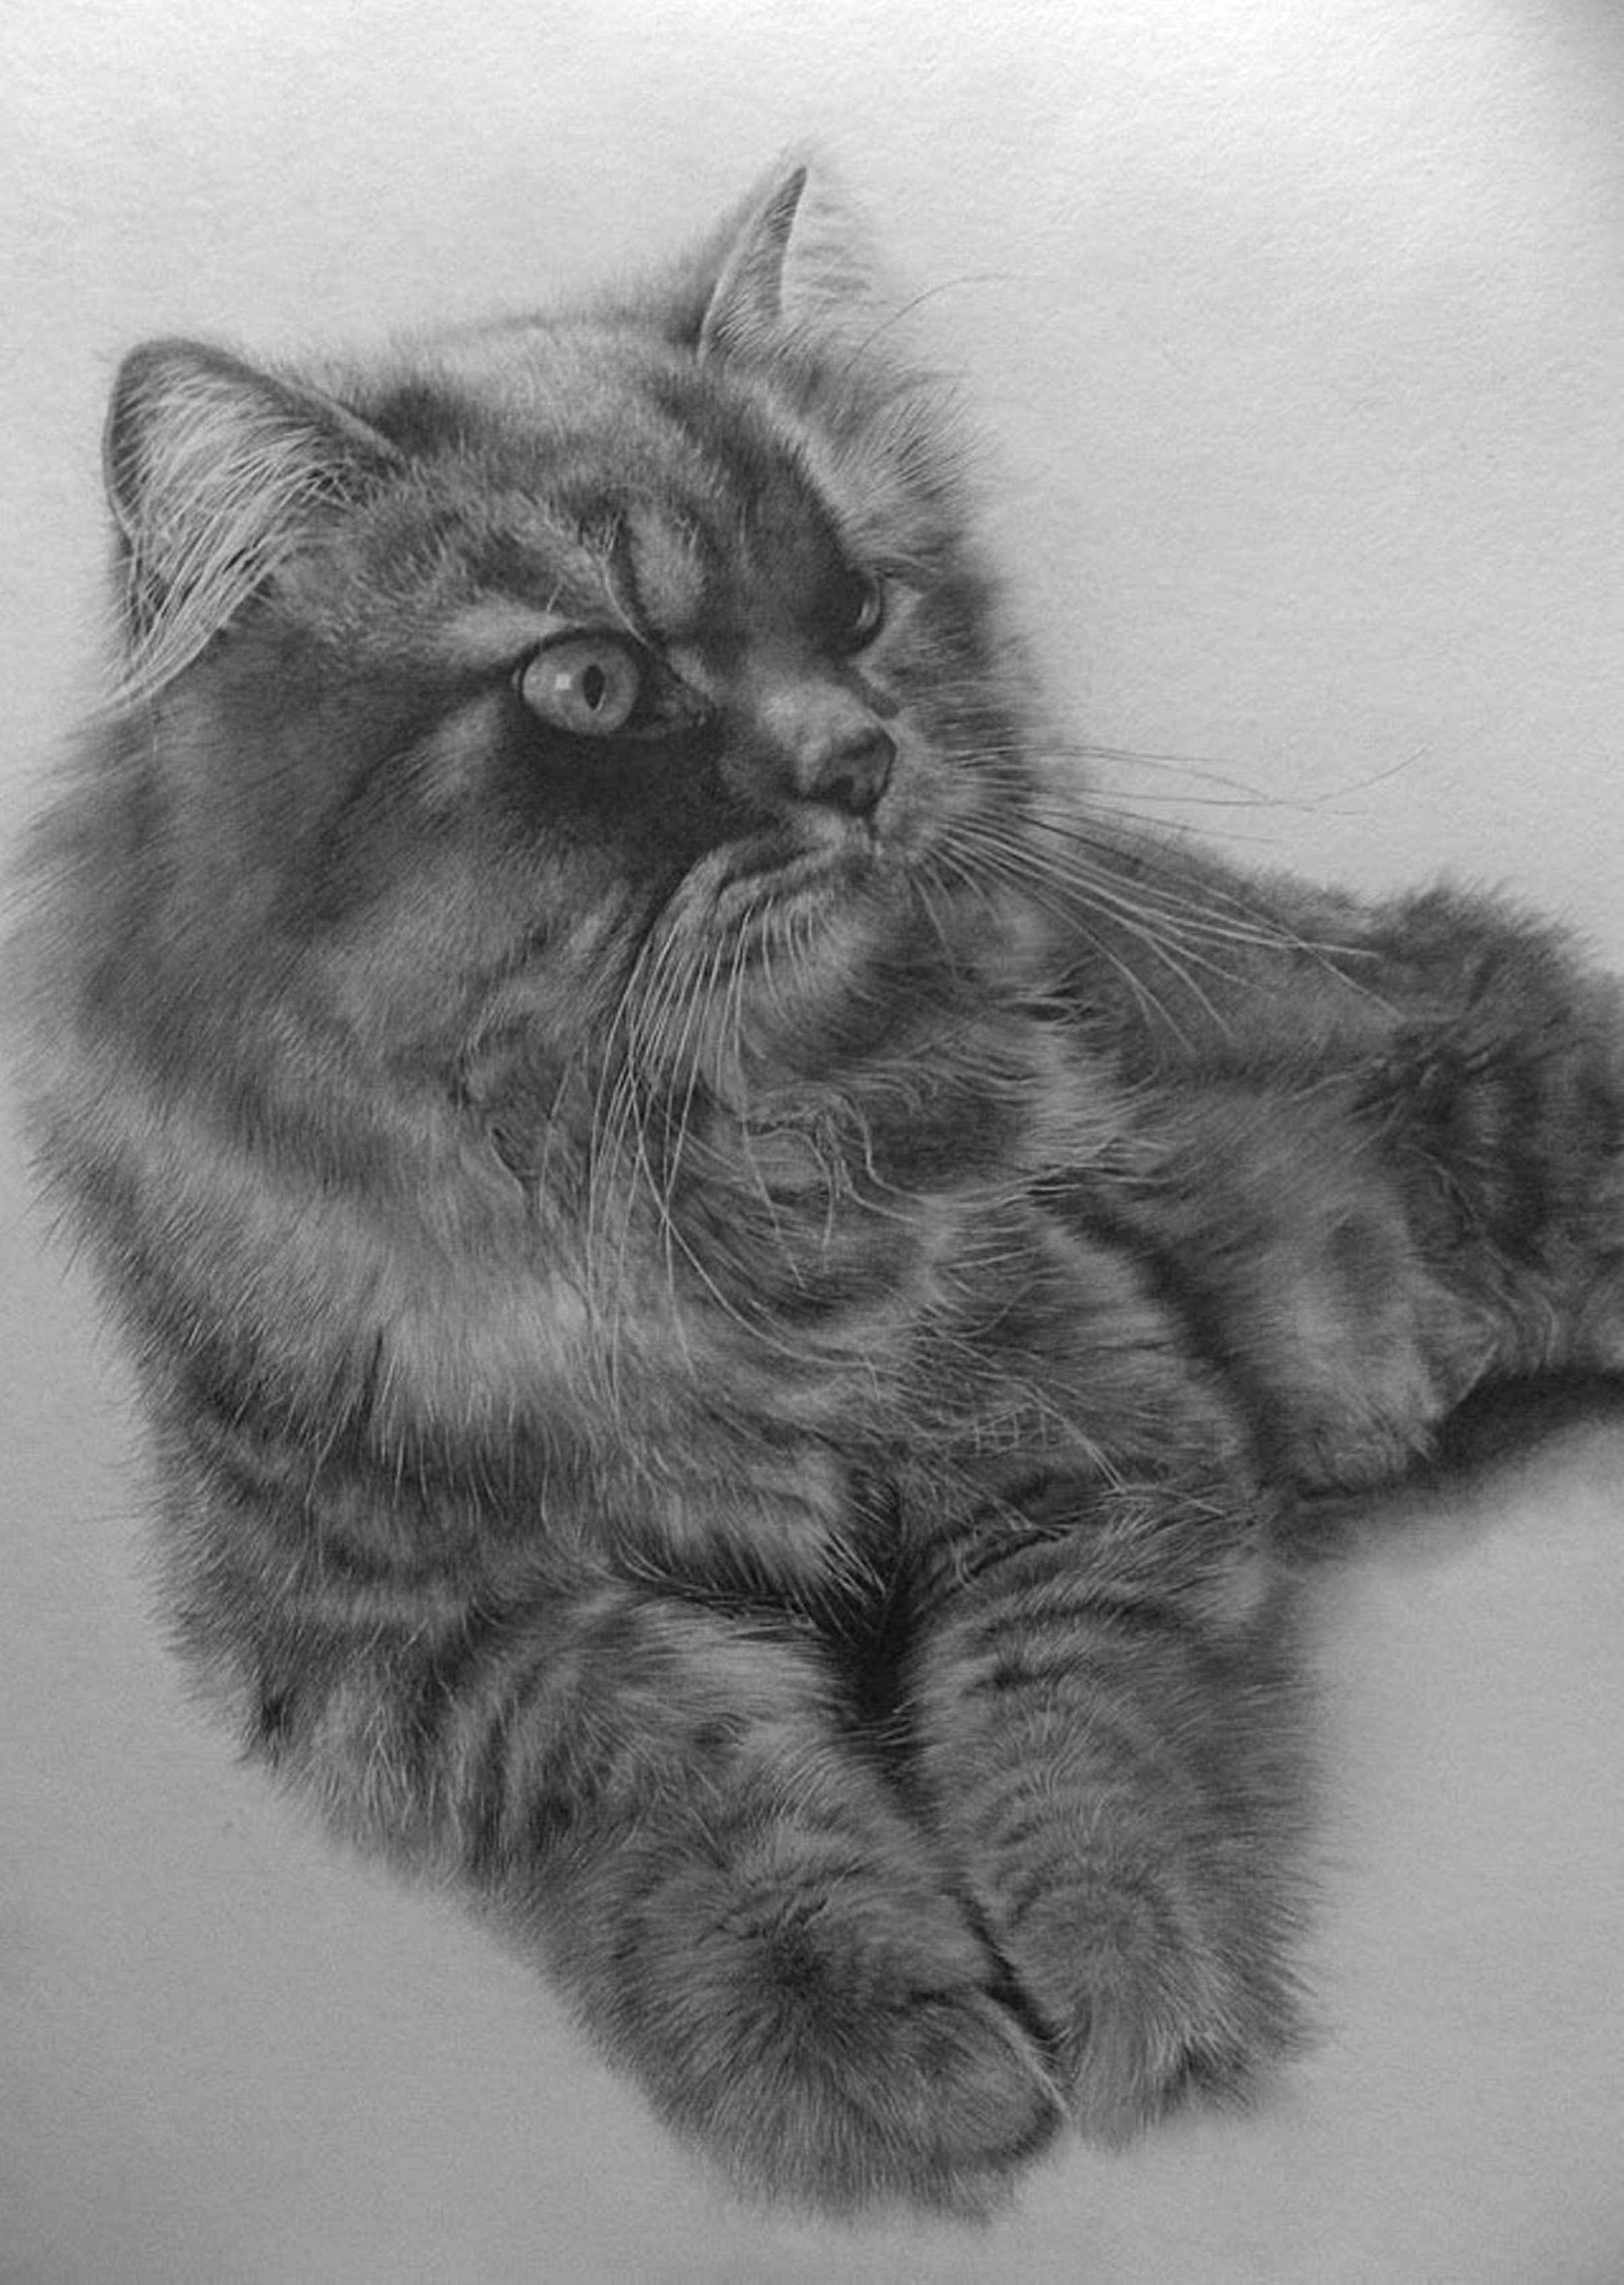 Фото рисунка кошки. Paul lung художник. Пол Лунг художник картины. Картины карандашом. Кошка карандашом.